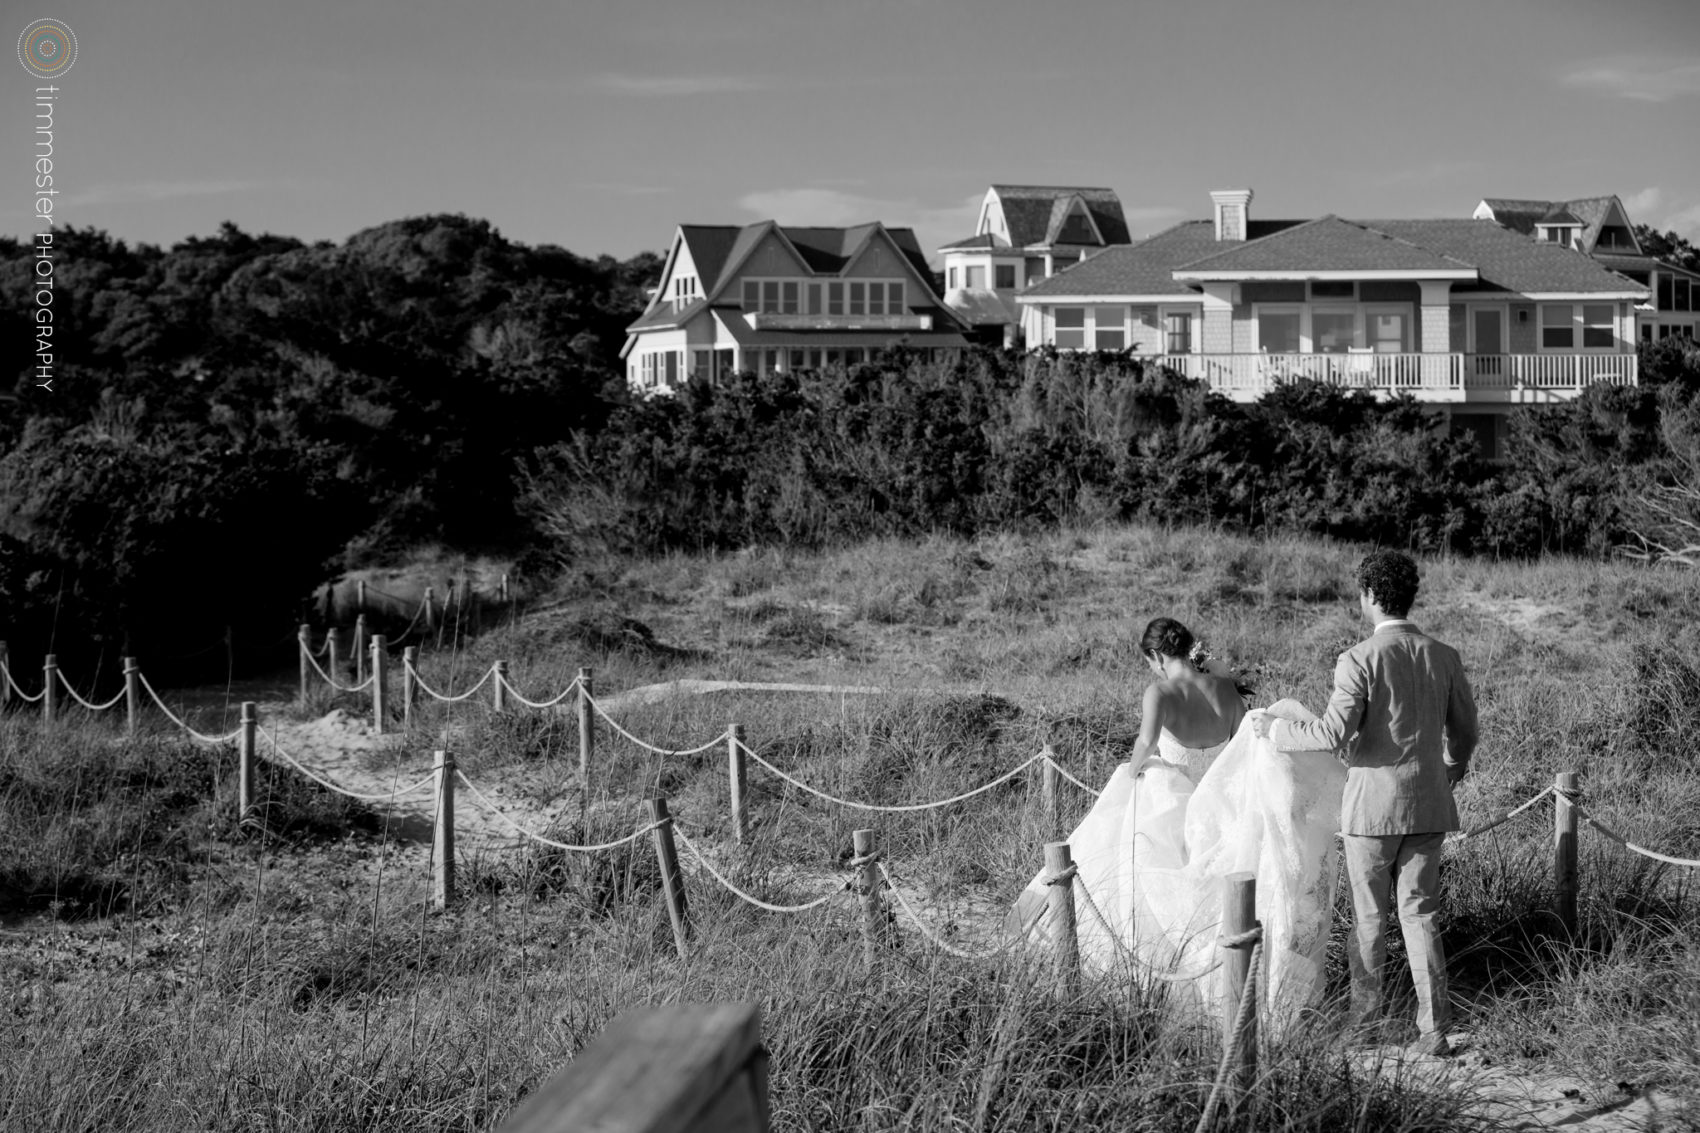 A Bald Head Island beach wedding ceremony in North Carolina